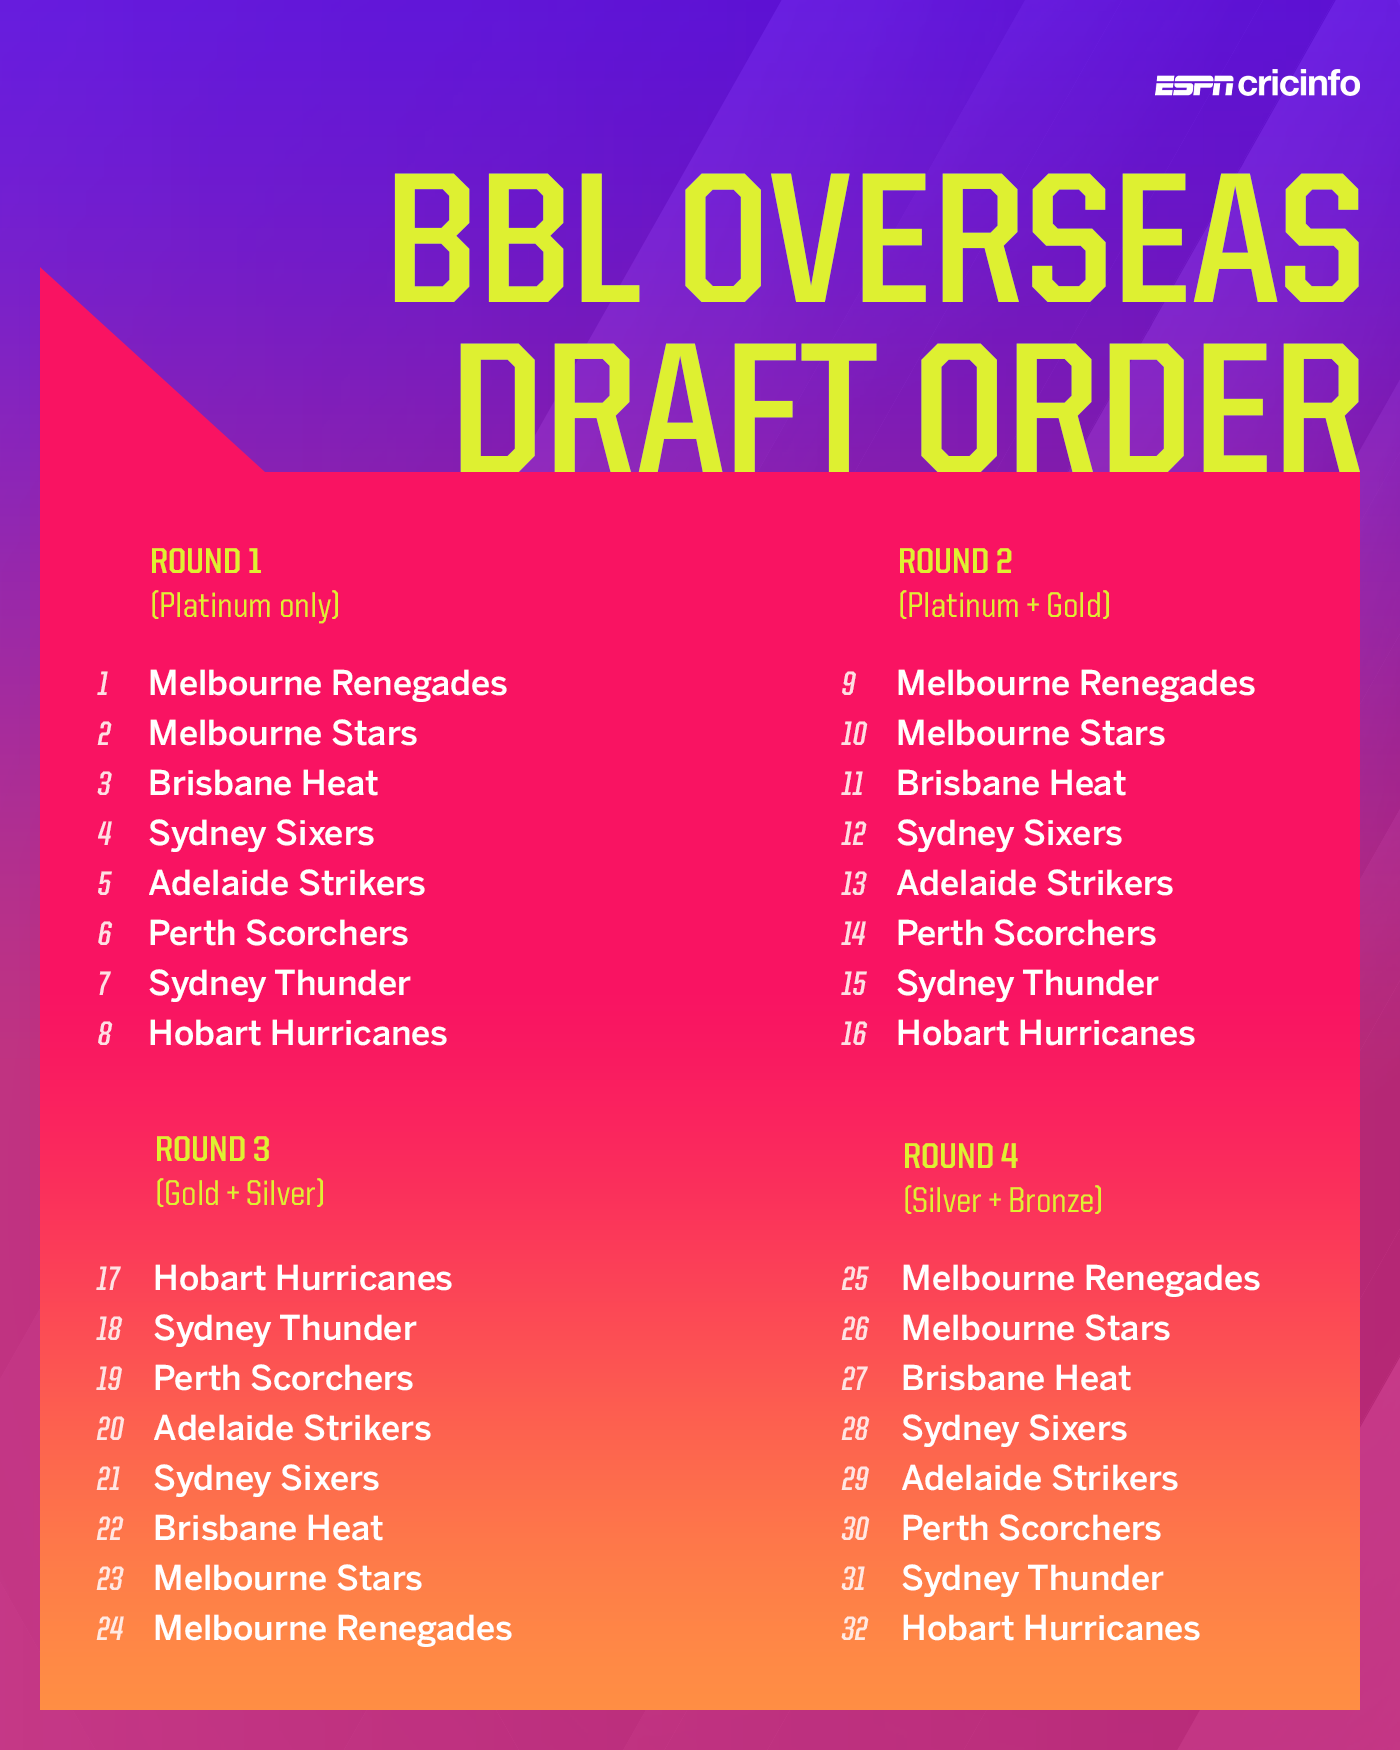 BBL Overseas Draft Order